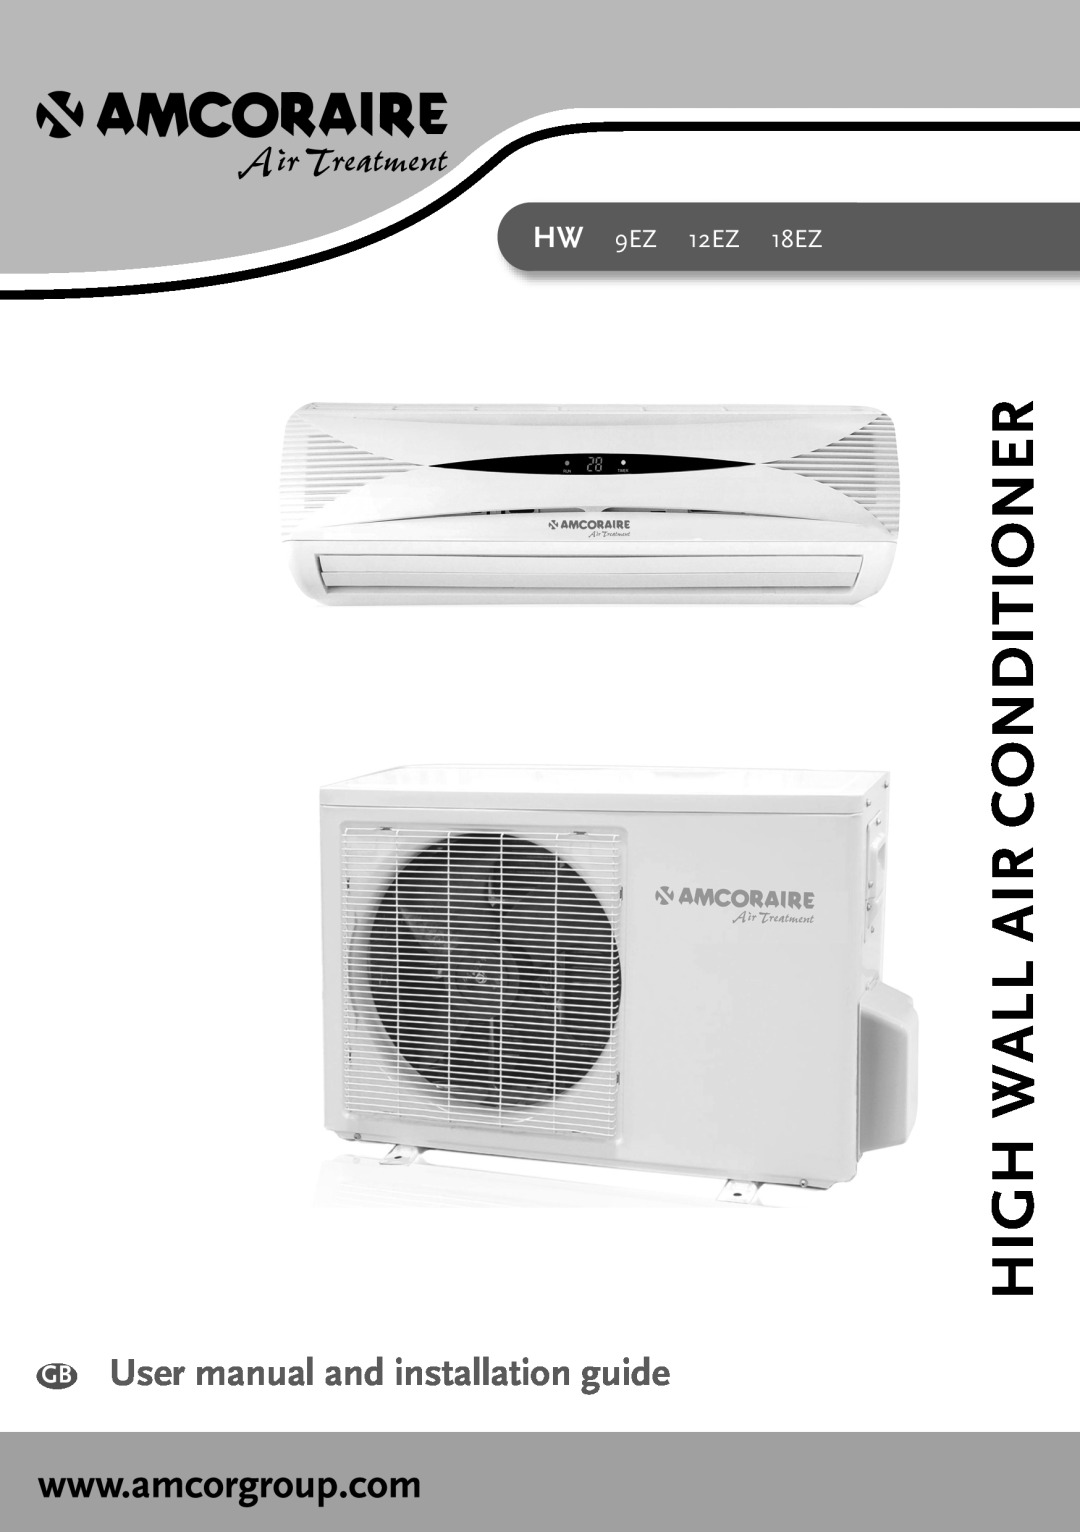 Lexmark user manual High Wall Air Conditioner, HW 9EZ 12EZ 18EZ 